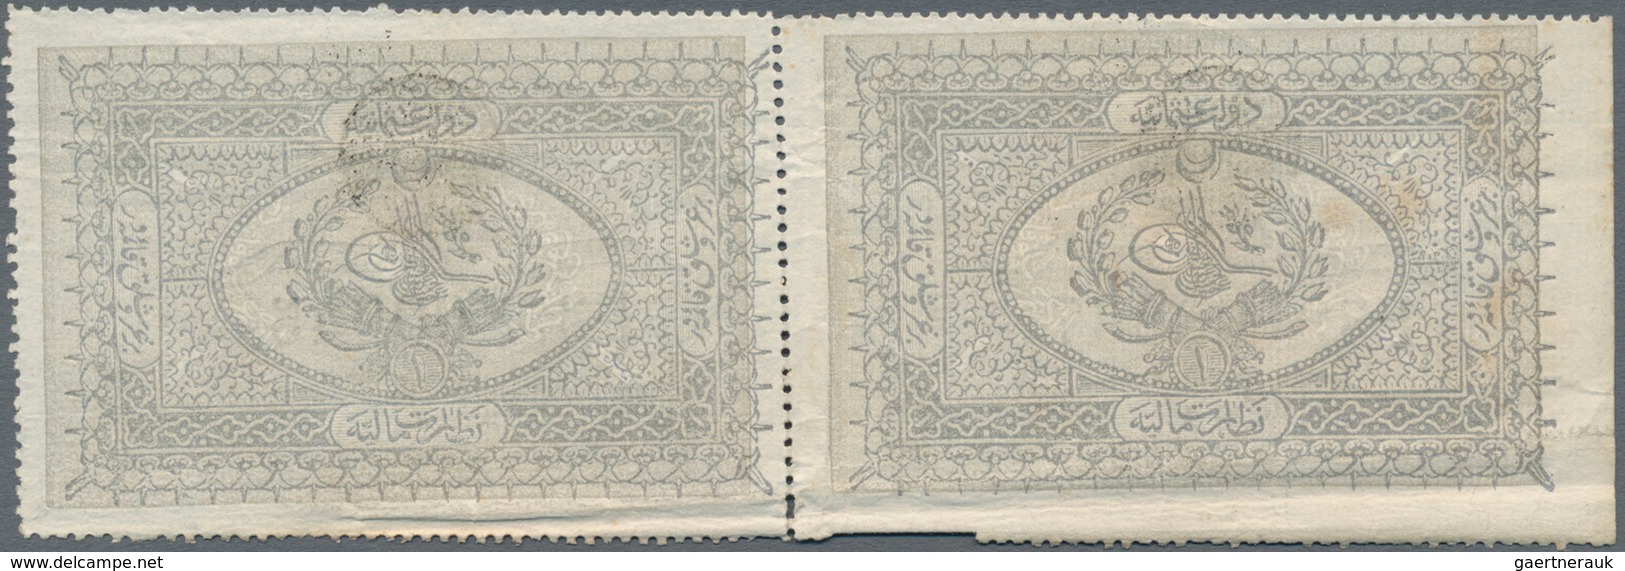 Turkey / Türkei: Banque Impériale Ottomane Uncut Pair Of 1 Kurus AH 1293-1295 (1876-78), P.46, Stain - Turquia